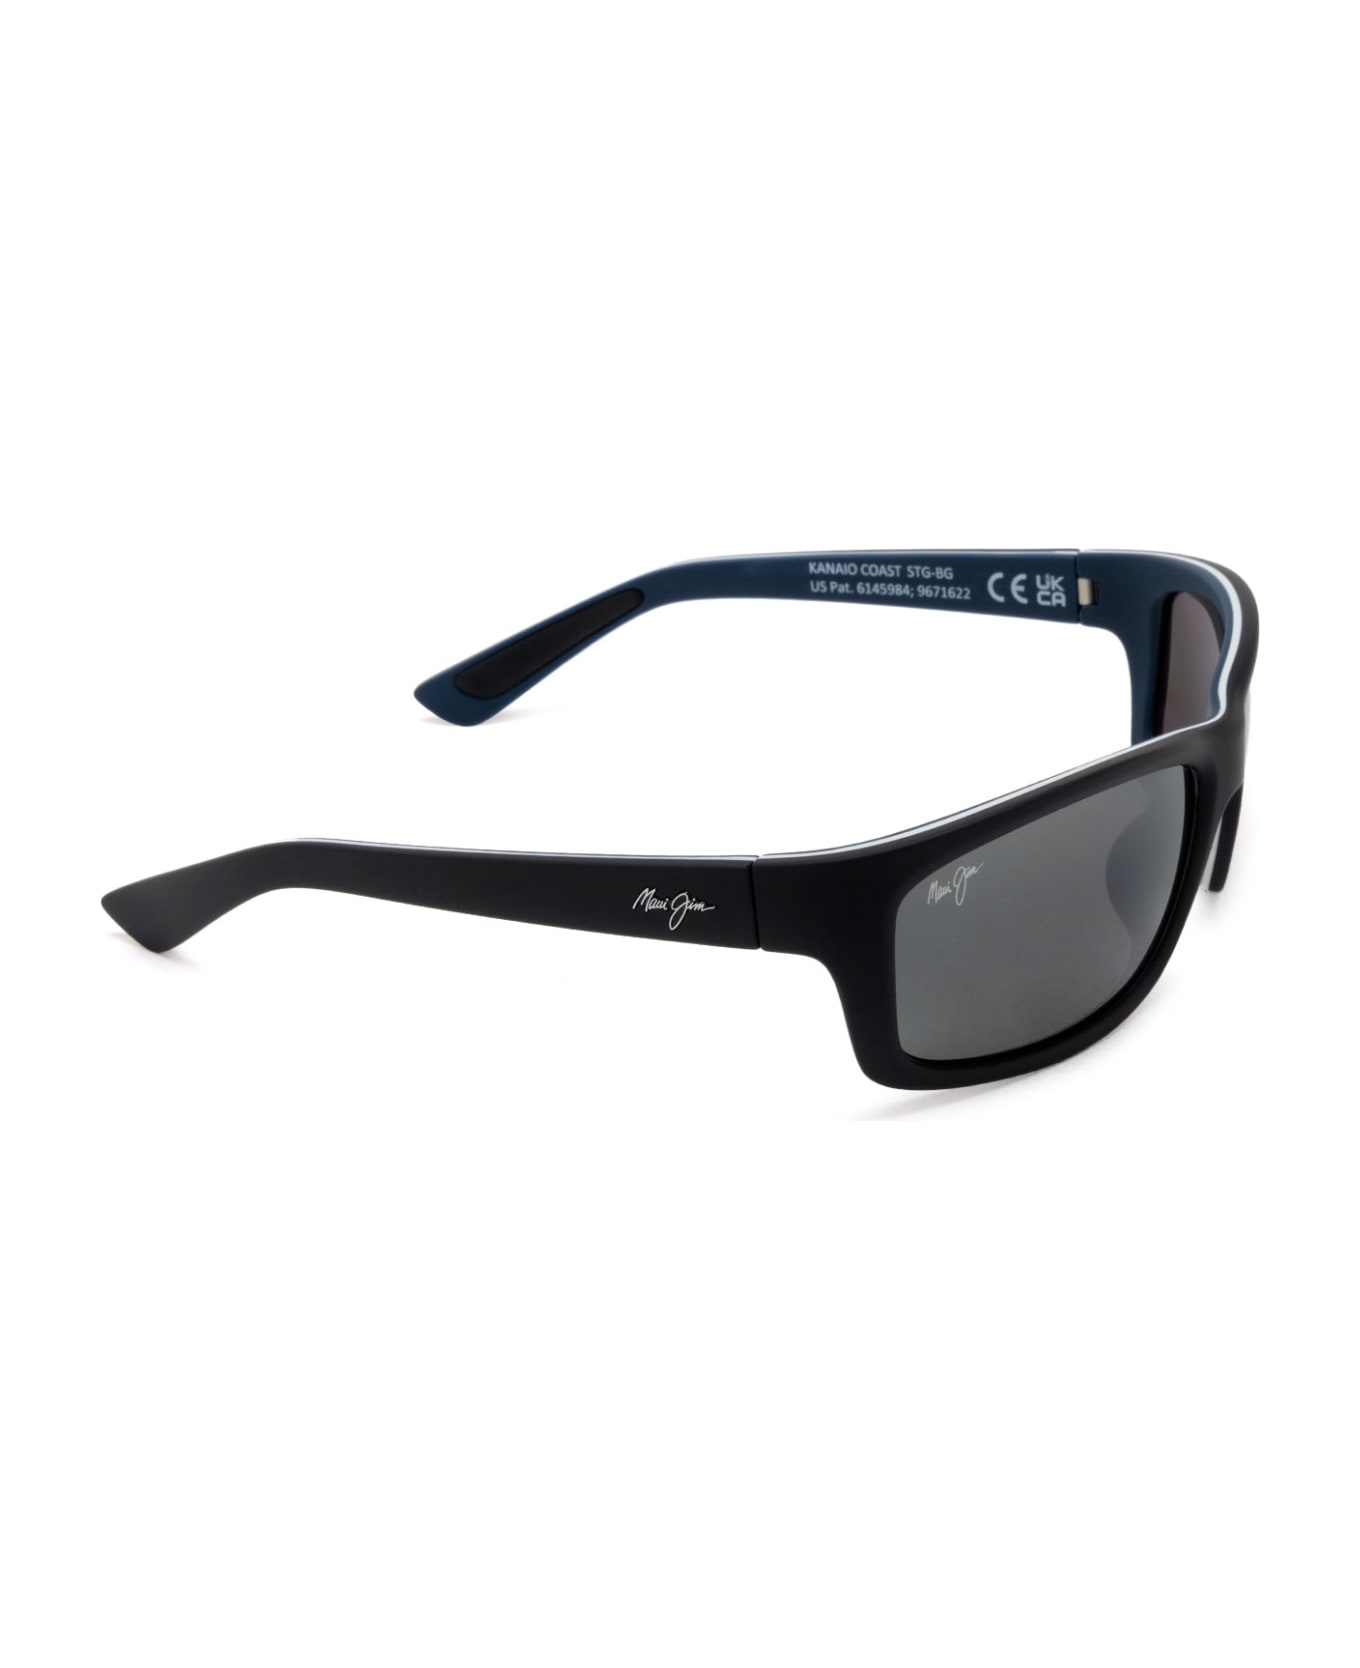 Maui Jim Mj766 Matte Soft Black / White / Blue Sunglasses - Matte Soft Black / White / Blue サングラス